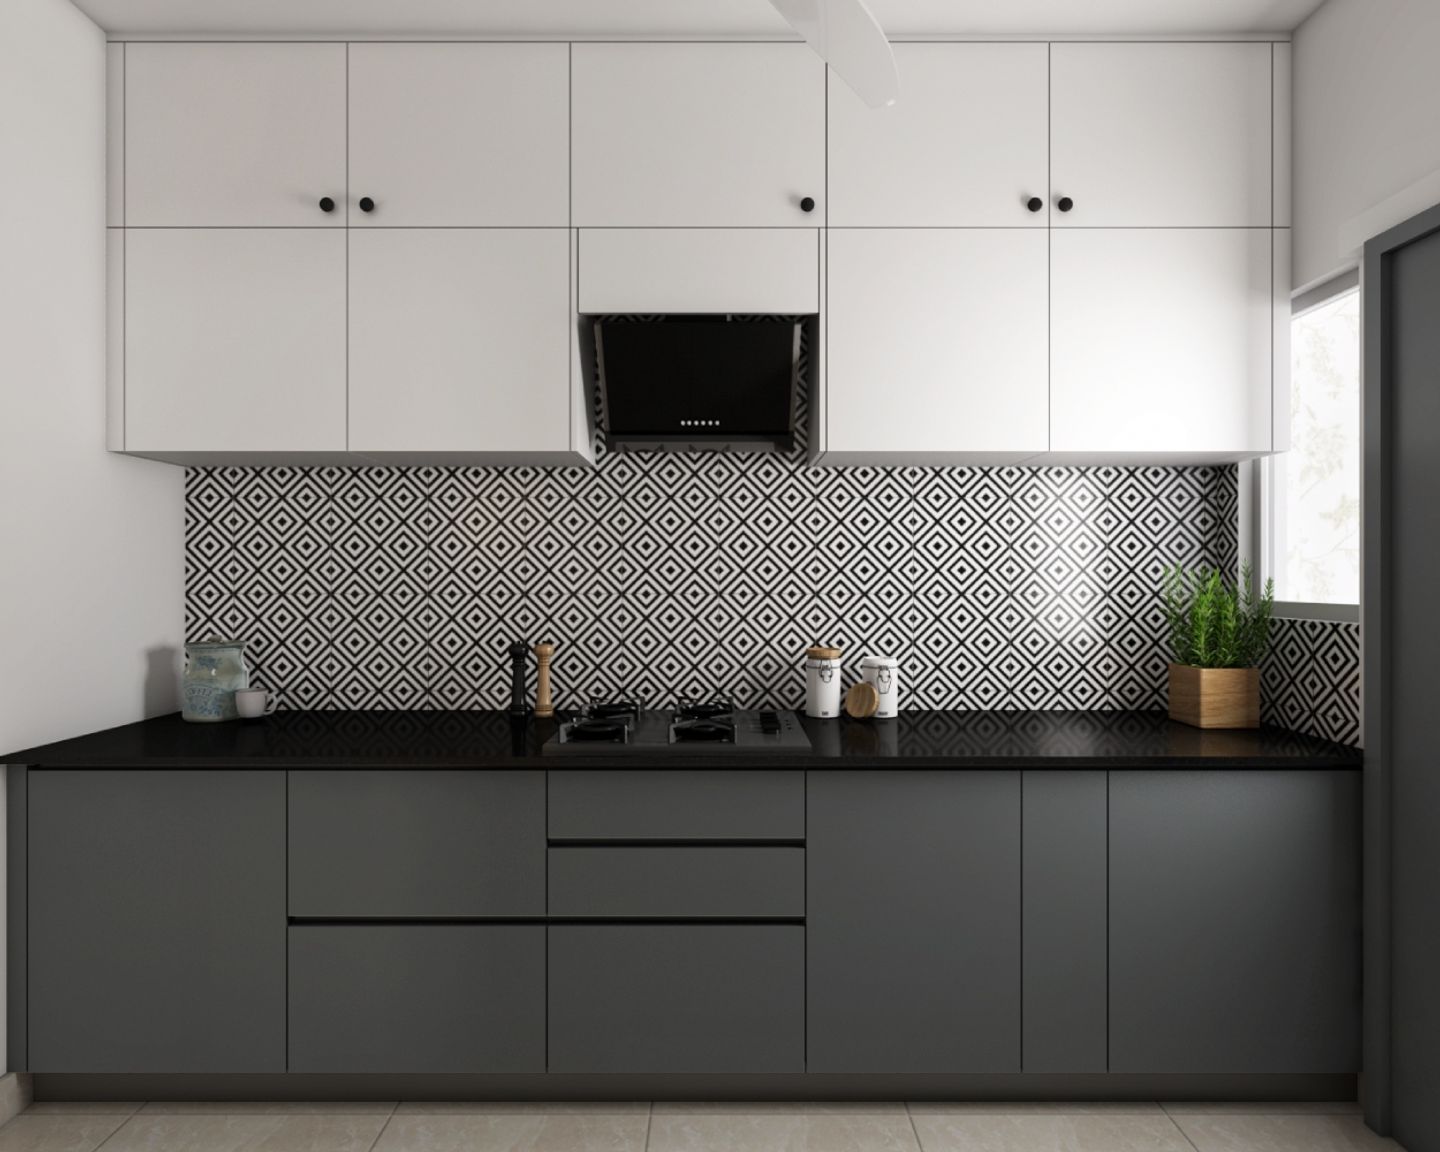 Modular Kitchen Design With Spacious Drawer Storage - 11X10 Ft | Livspace